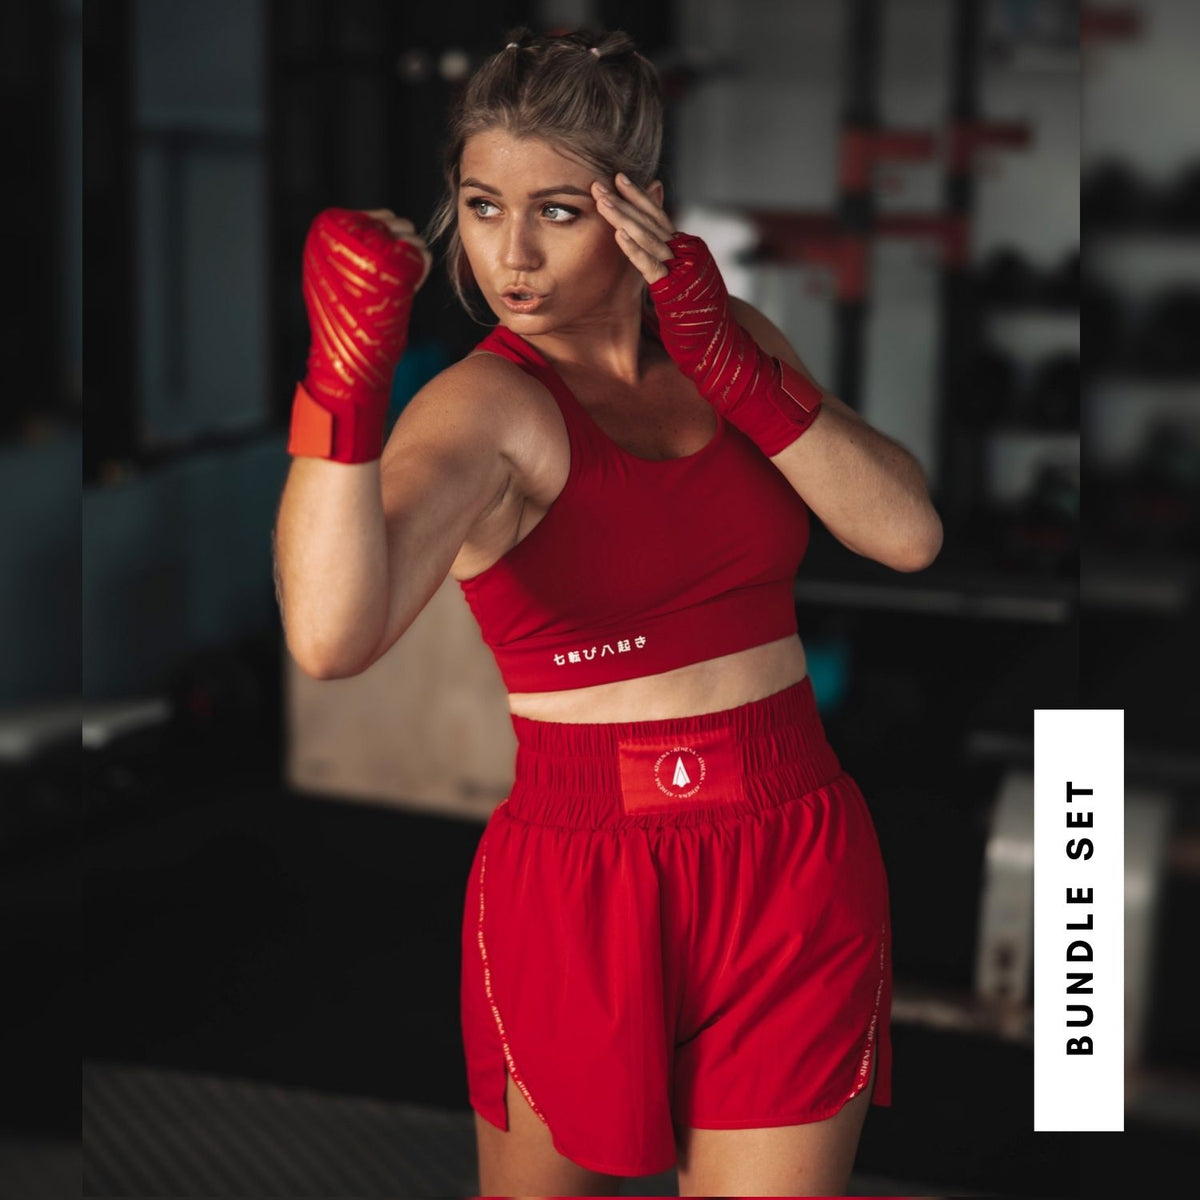 Kickboxing Girl in Black Sports Bra and Red Boxing Gloves